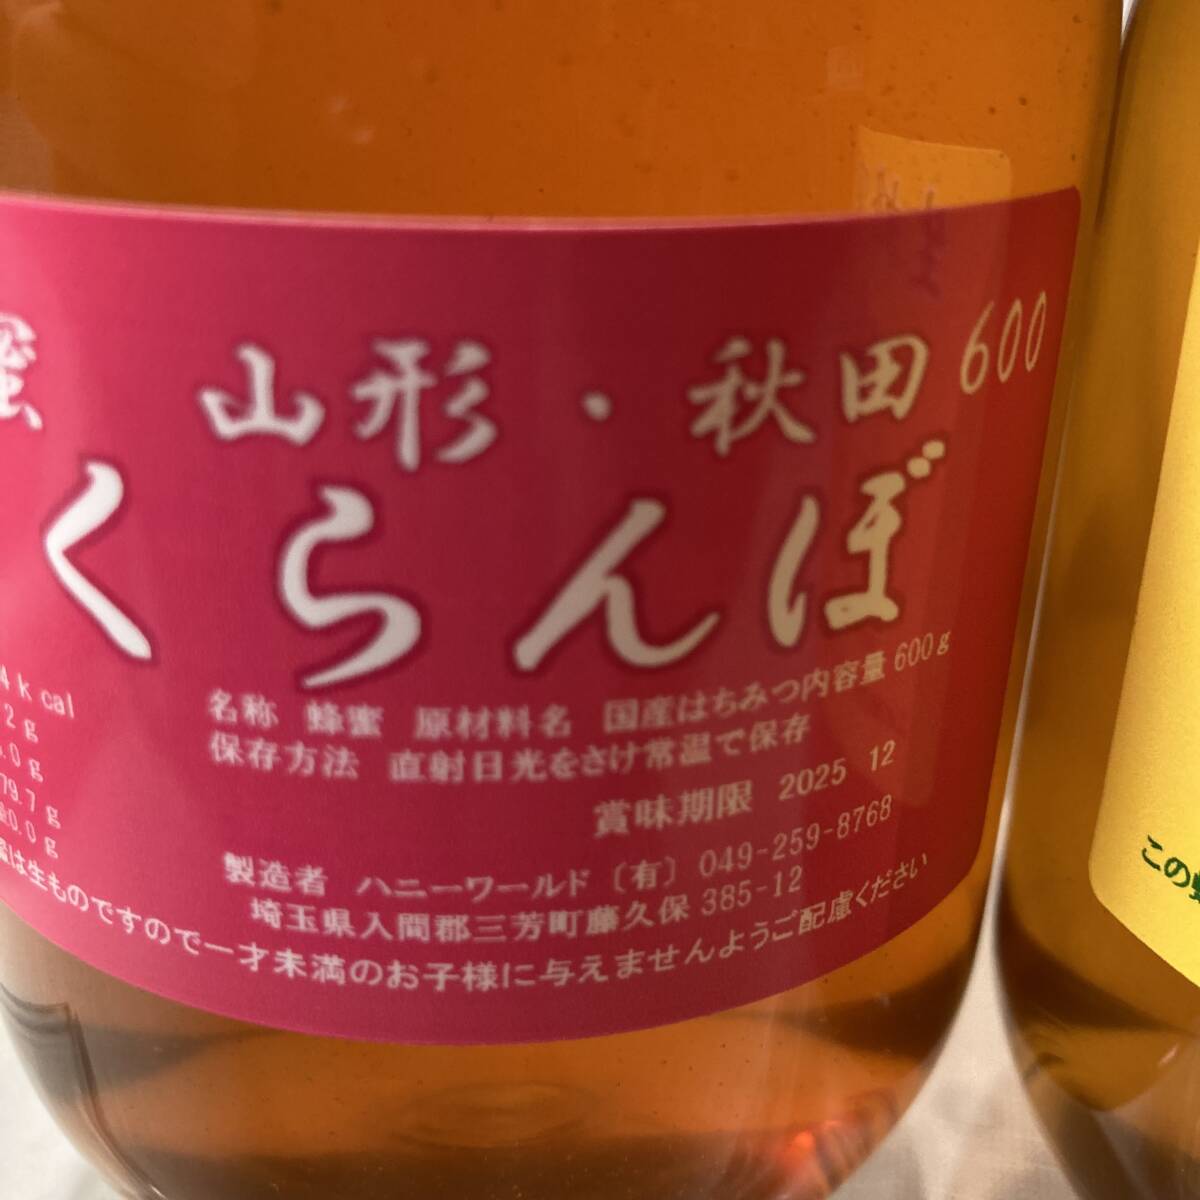  cherry molasses Sakura molasses exceedingly rare domestic production raw honey each 600g total 1200g.. taste .. deep delicate non heating 